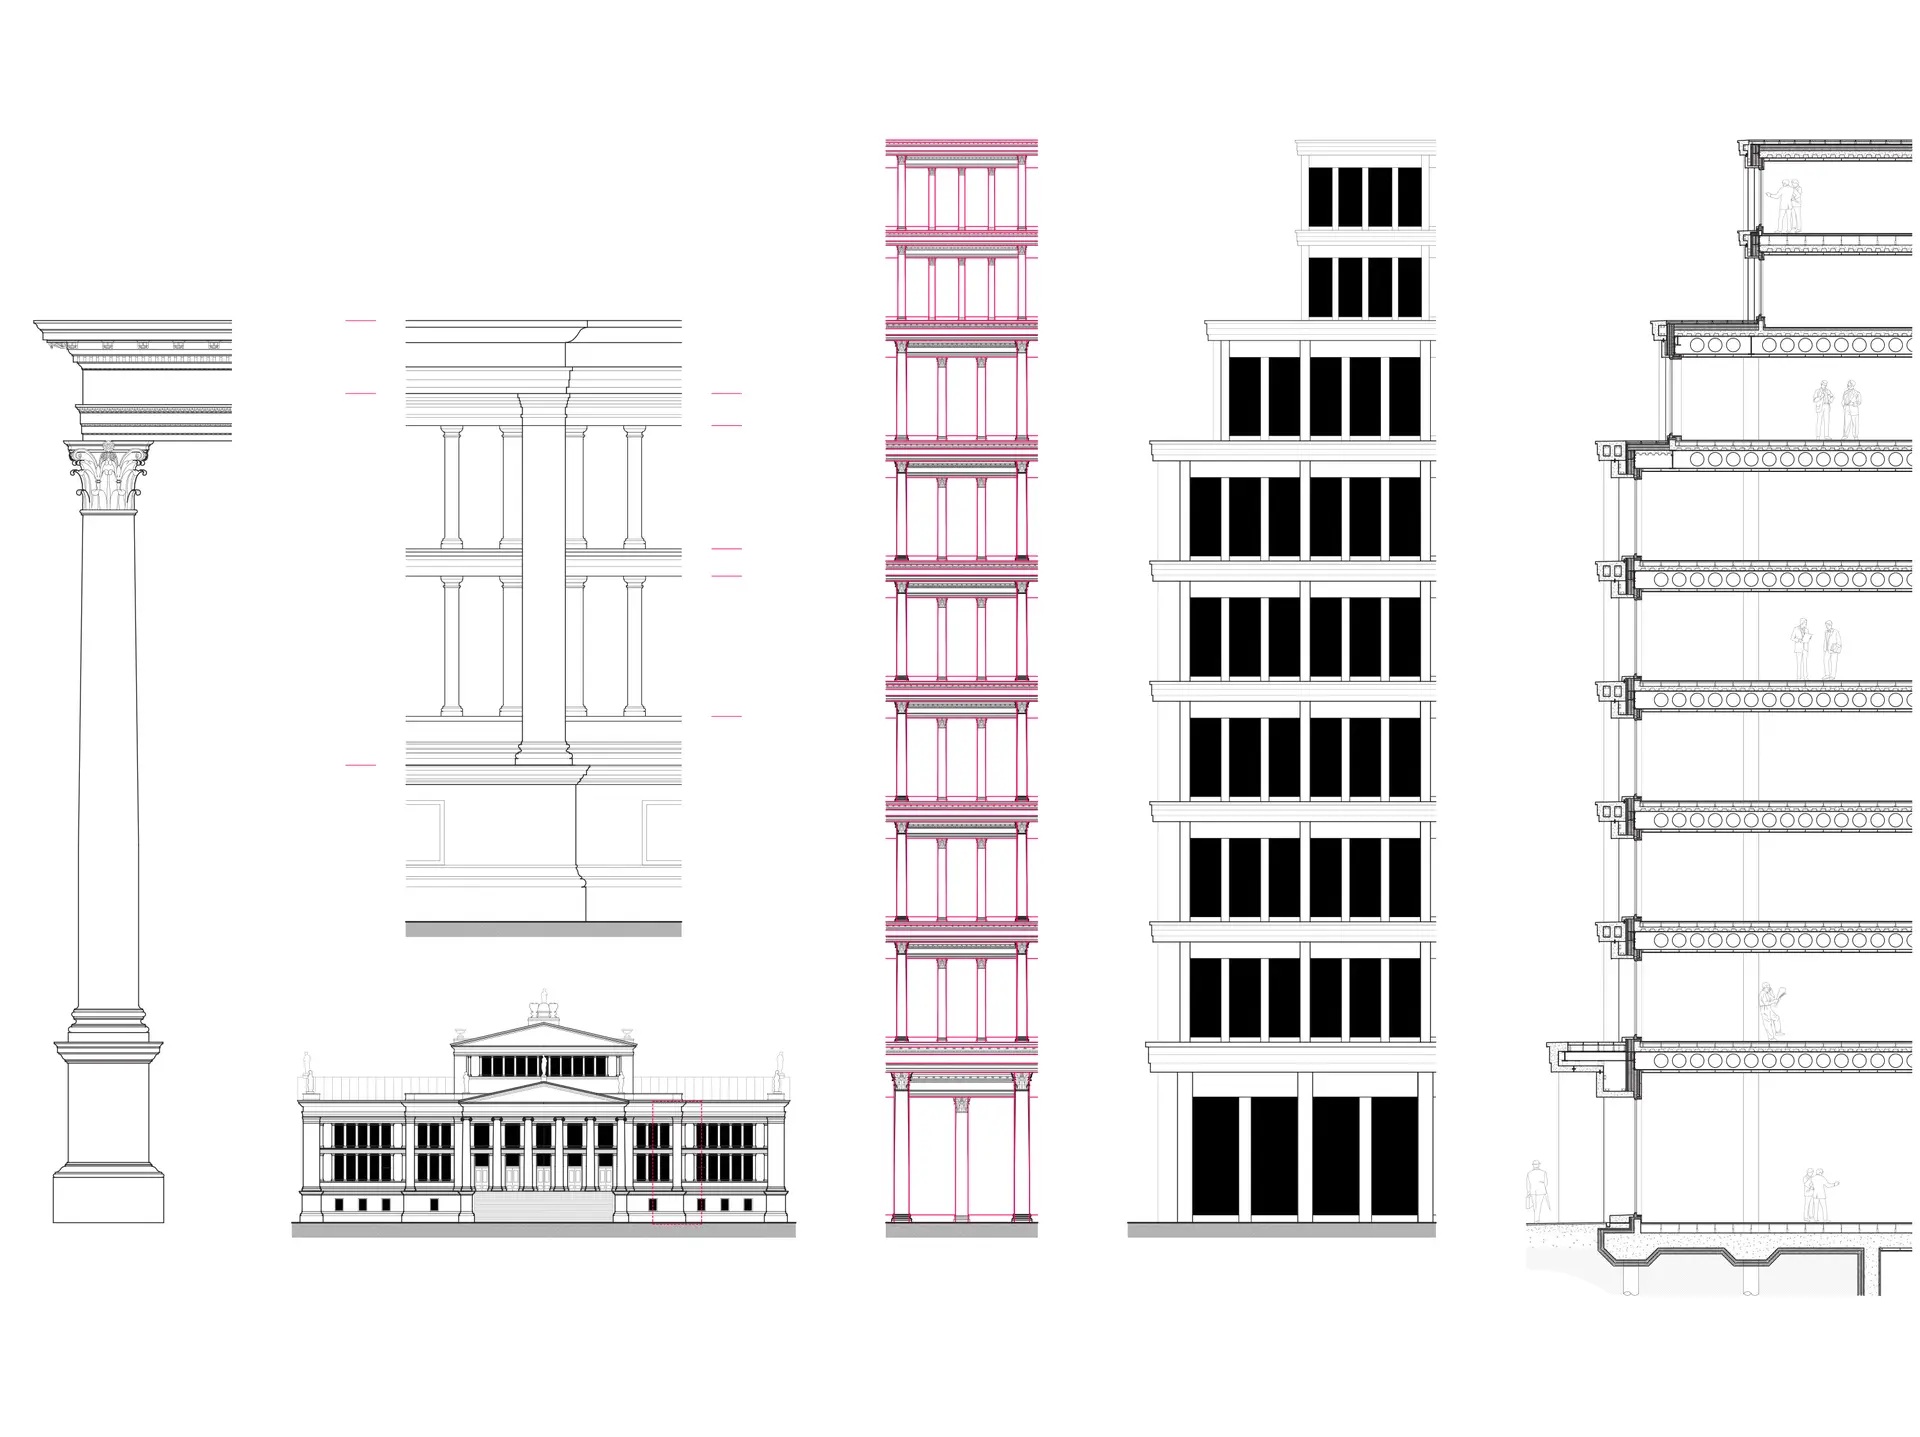 Livery Hall facade composition research, Joe Manuel, 2015